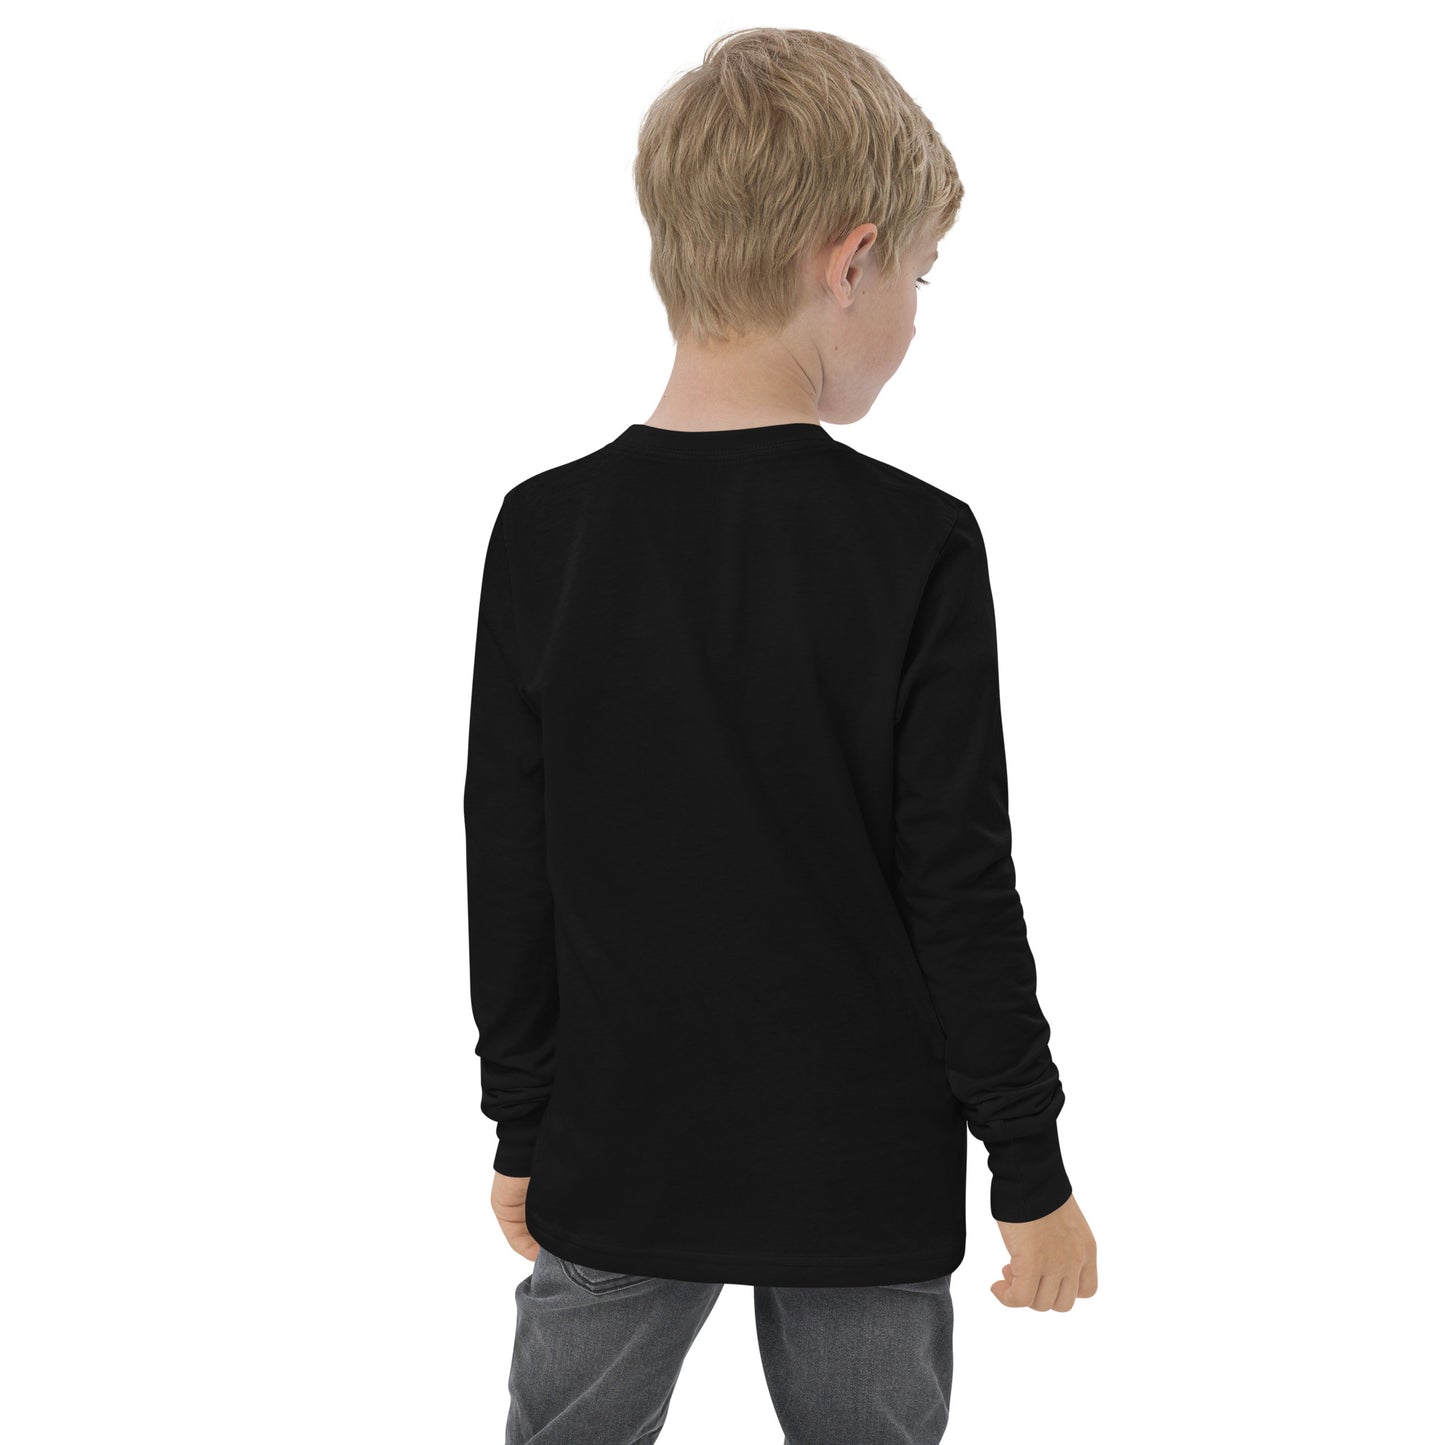 Kid's Long Sleeve Shirt Flakout.